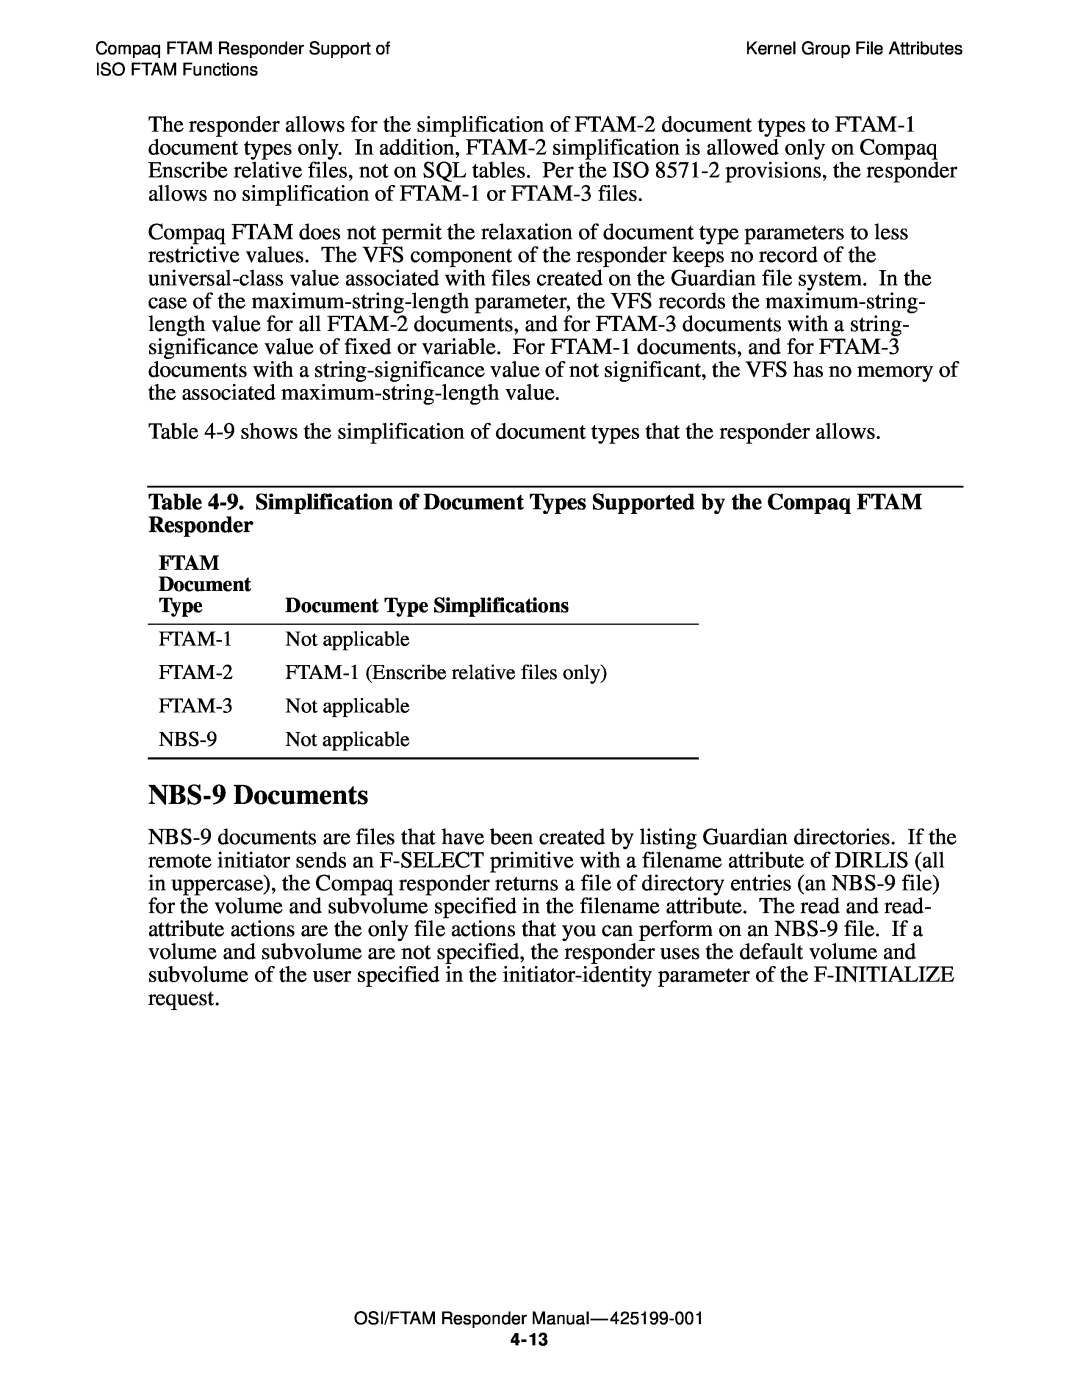 Compaq OSI/FTAM D43, OSI/APLMGR D43 manual NBS-9 Documents 